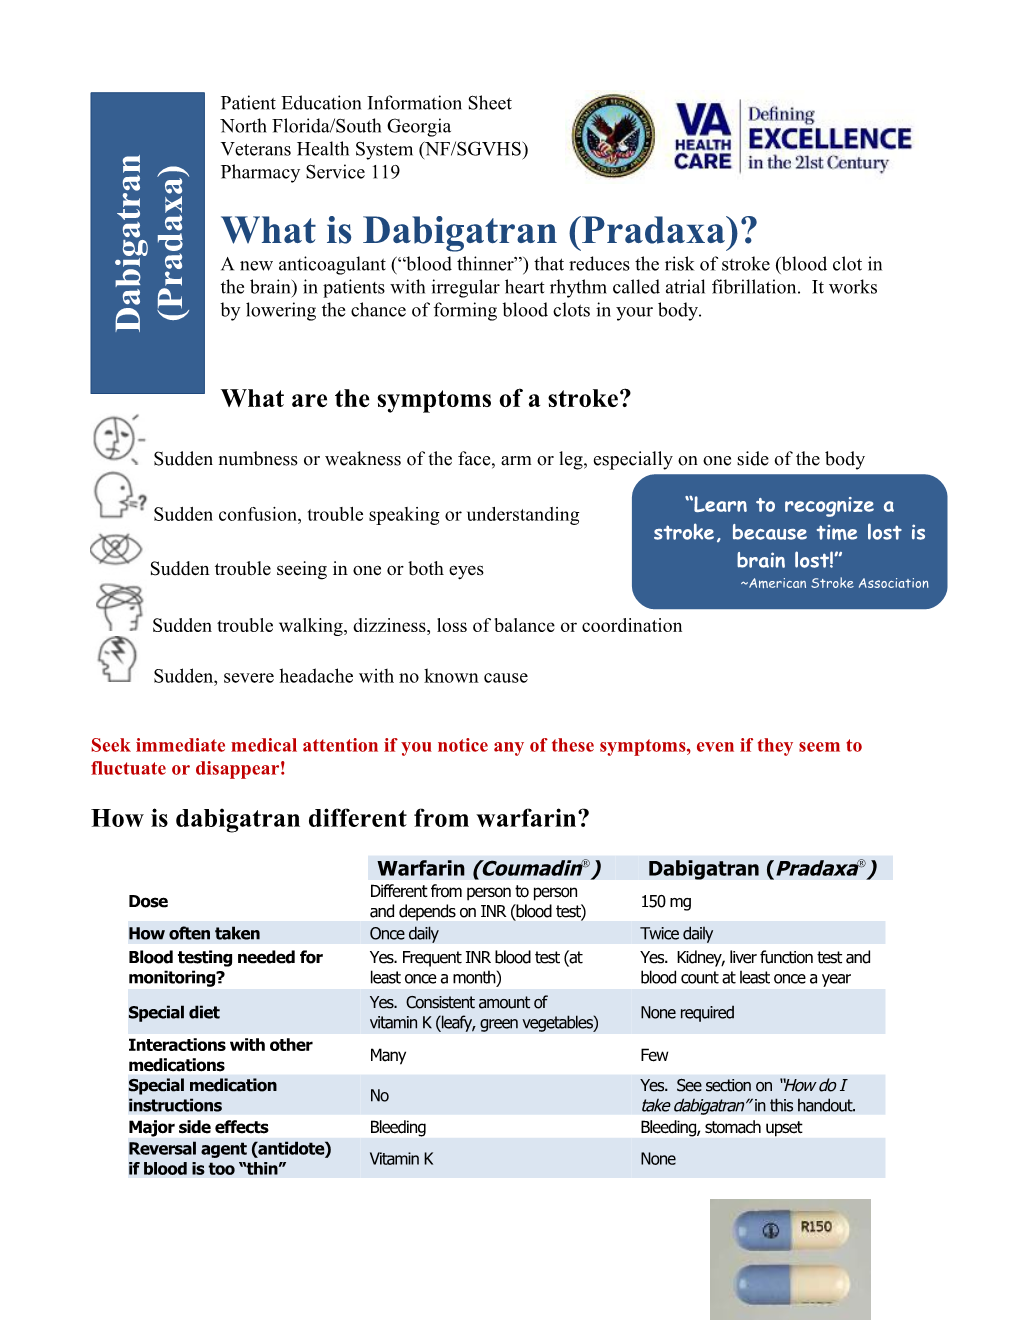 What Is Dabigatran (Pradaxa)?